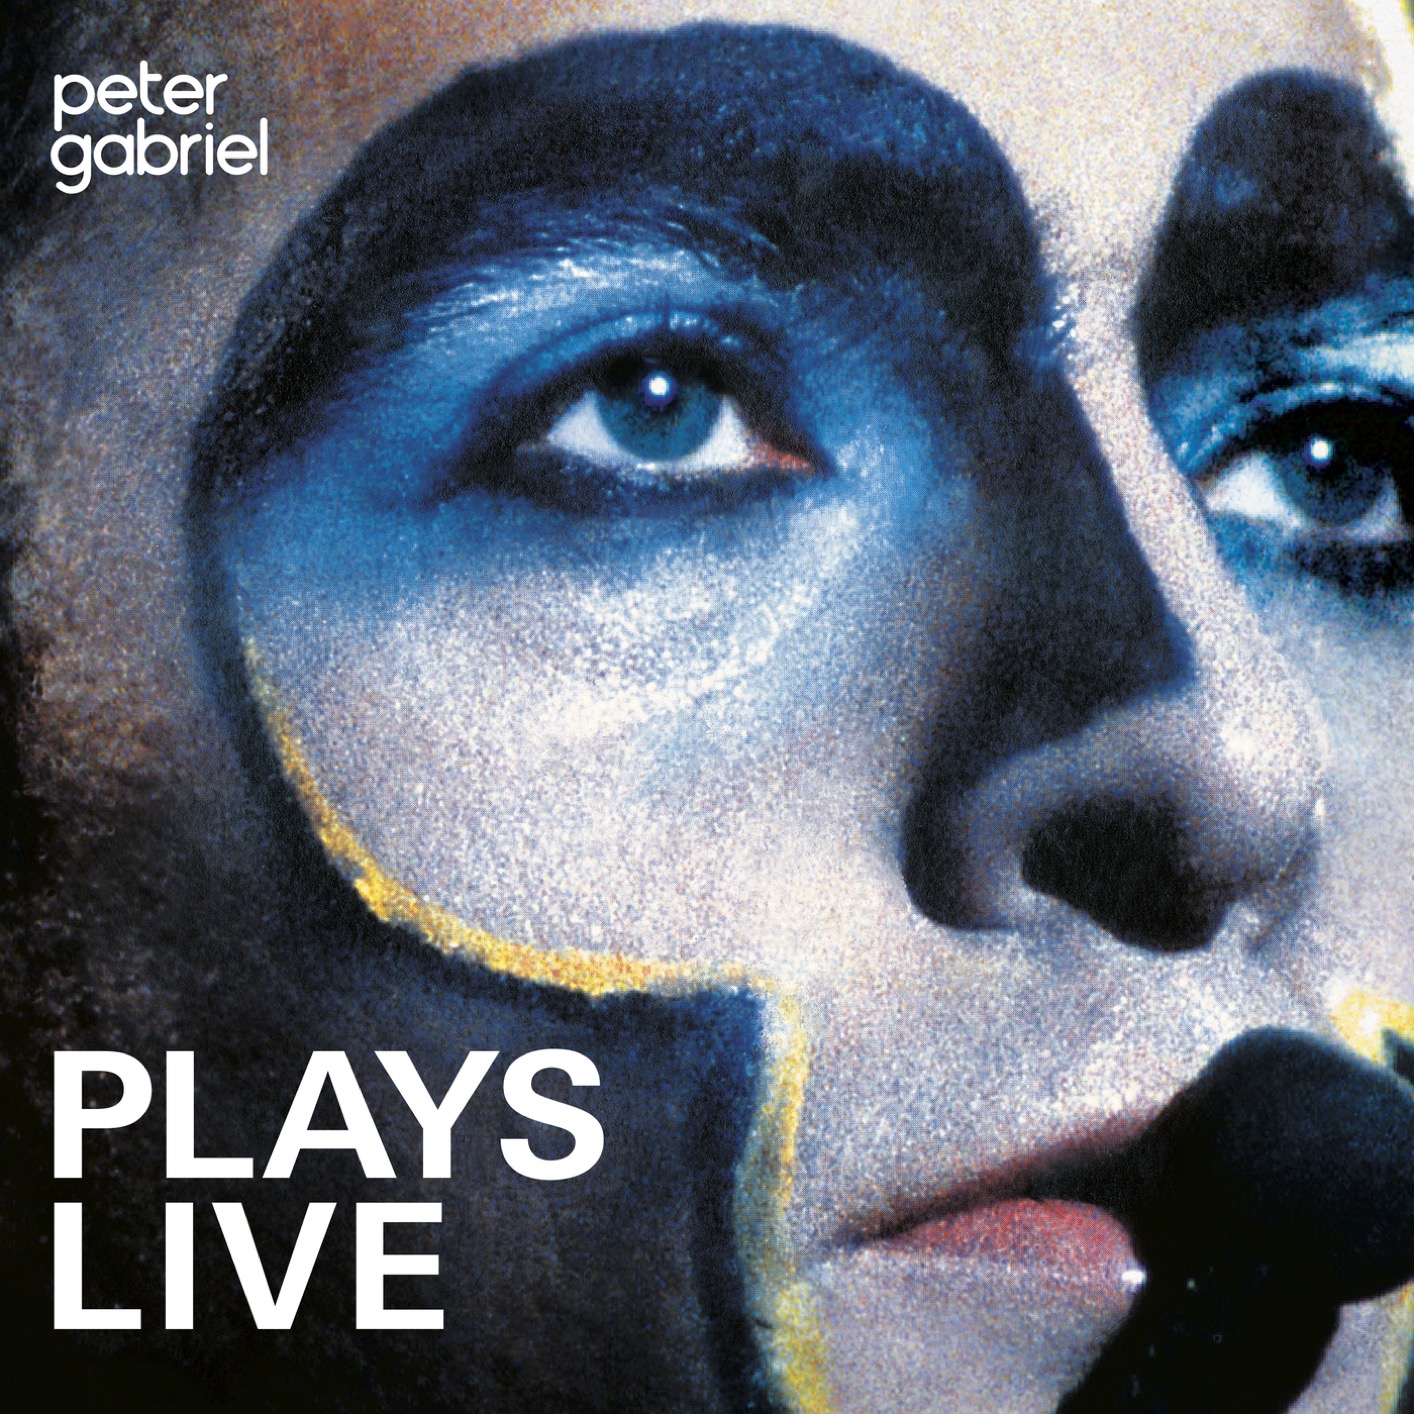 Peter Gabriel - Plays Live (Remastered) (1983/2019) [FLAC 24bit/96kHz]